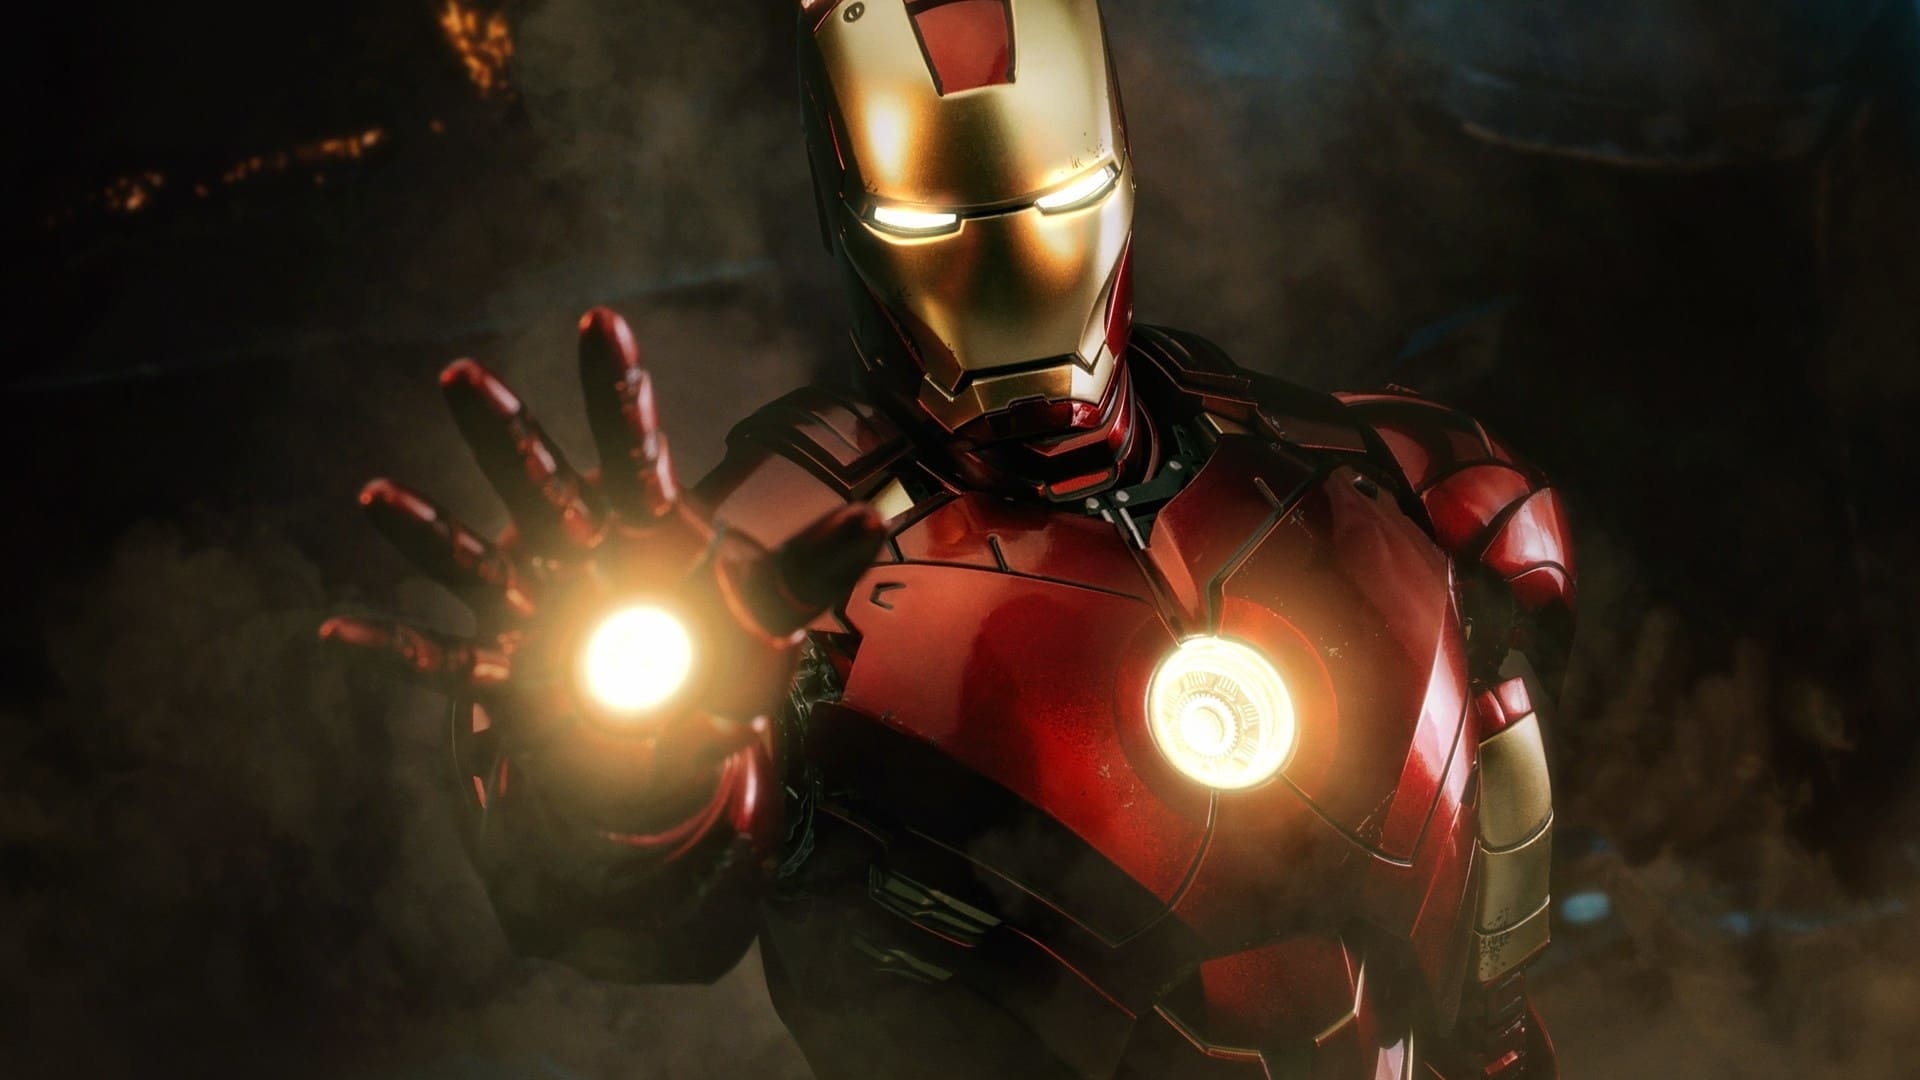 Iron Man: Billionaire tech-genius, son of famed weapons developer Howard Stark. 1920x1080 Full HD Wallpaper.